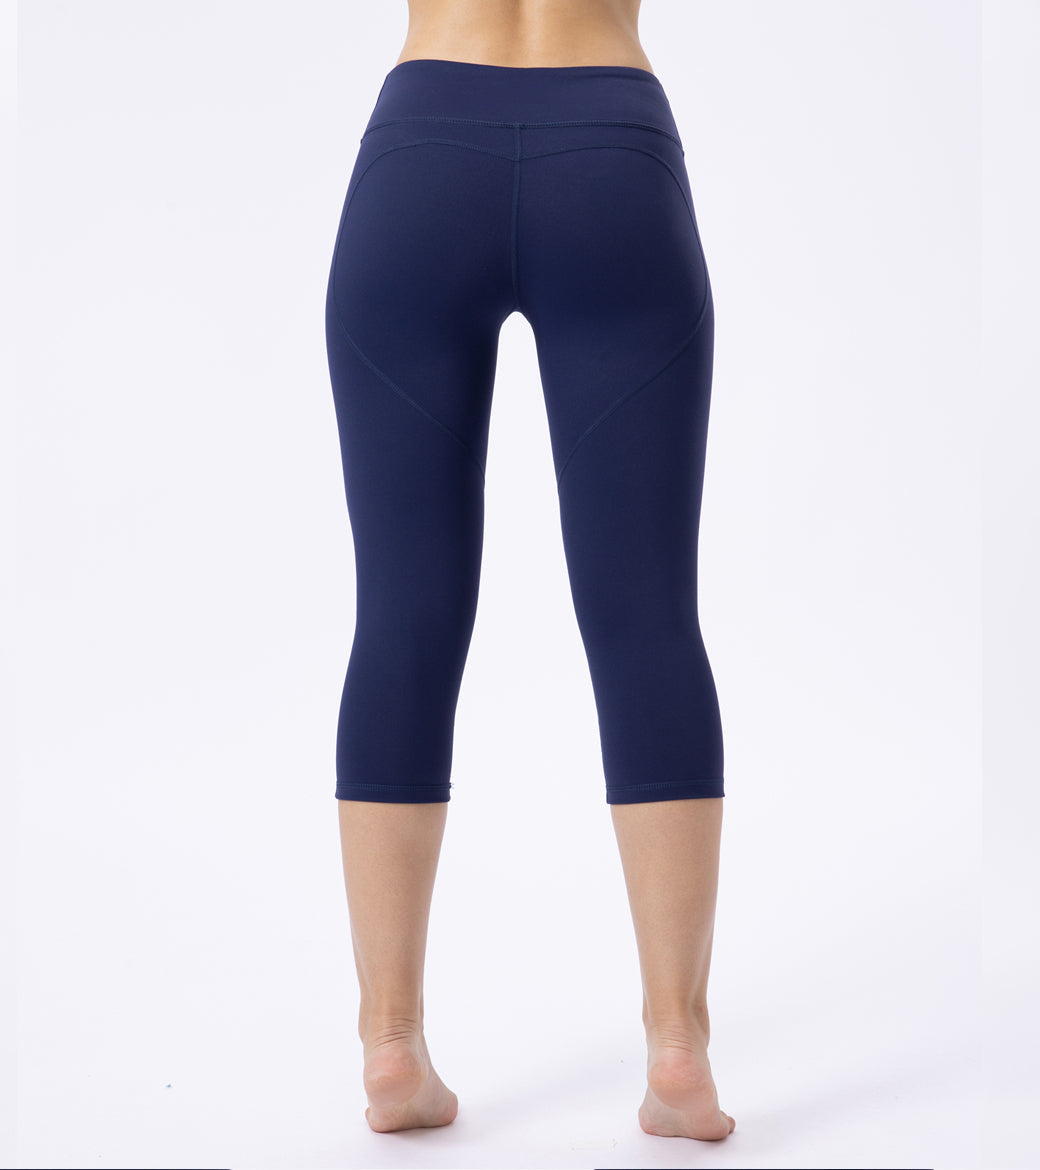 LOVESOFT Blue Mesh Workout High Waist Yoga Pants